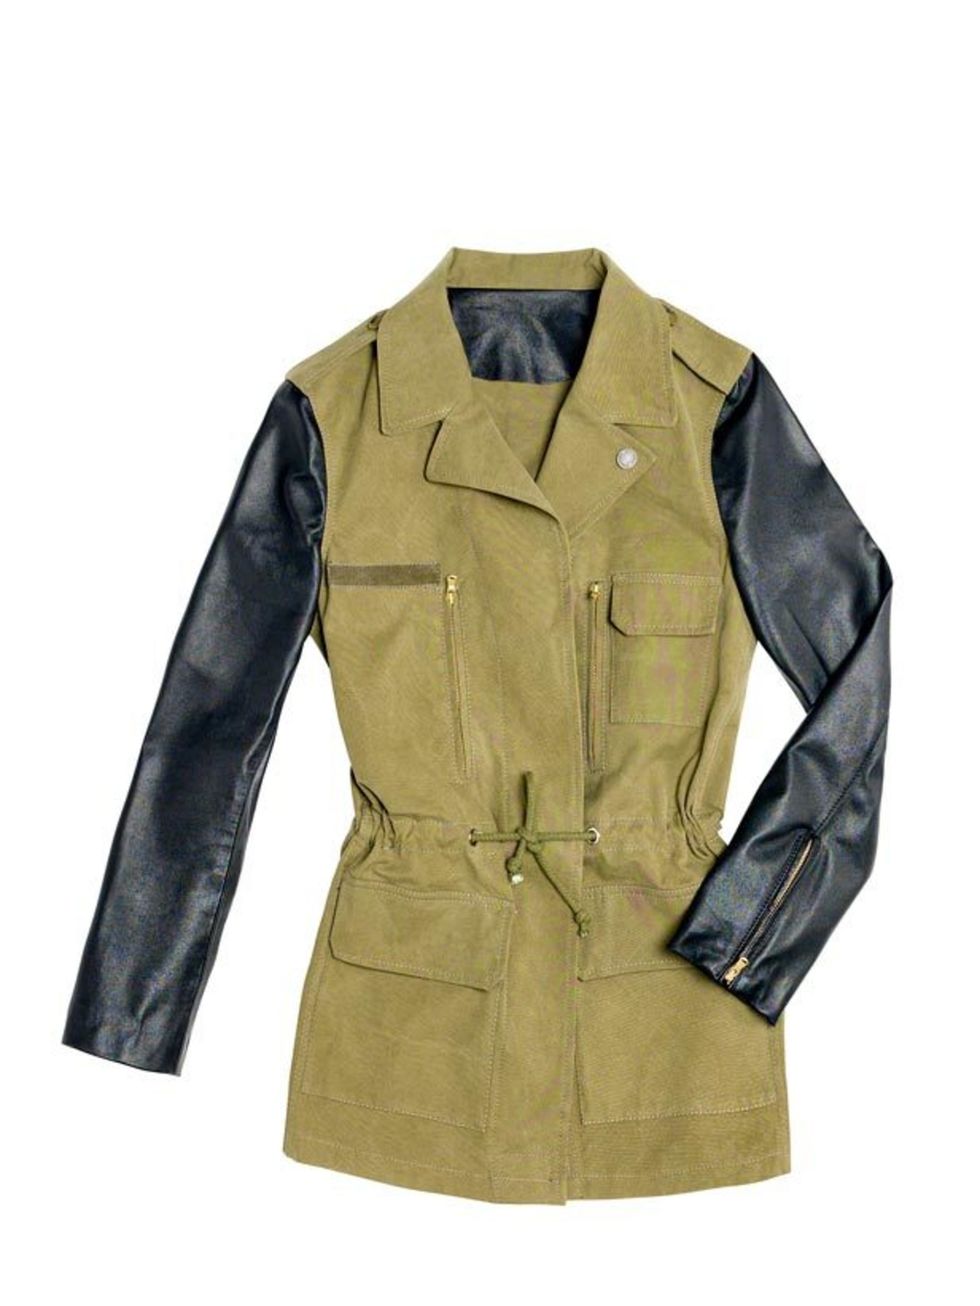 <p>Every wardrobe needs a utilitarian jacket, and Zaras luxe take on the staple is by the far the best on offer this autumn <a href="http://www.zara.com/webapp/wcs/stores/servlet/product/uk/en/zara-W2011/120003/533512/SHARIANA%2BWITH%2BLEATHER%2BSLEEVES